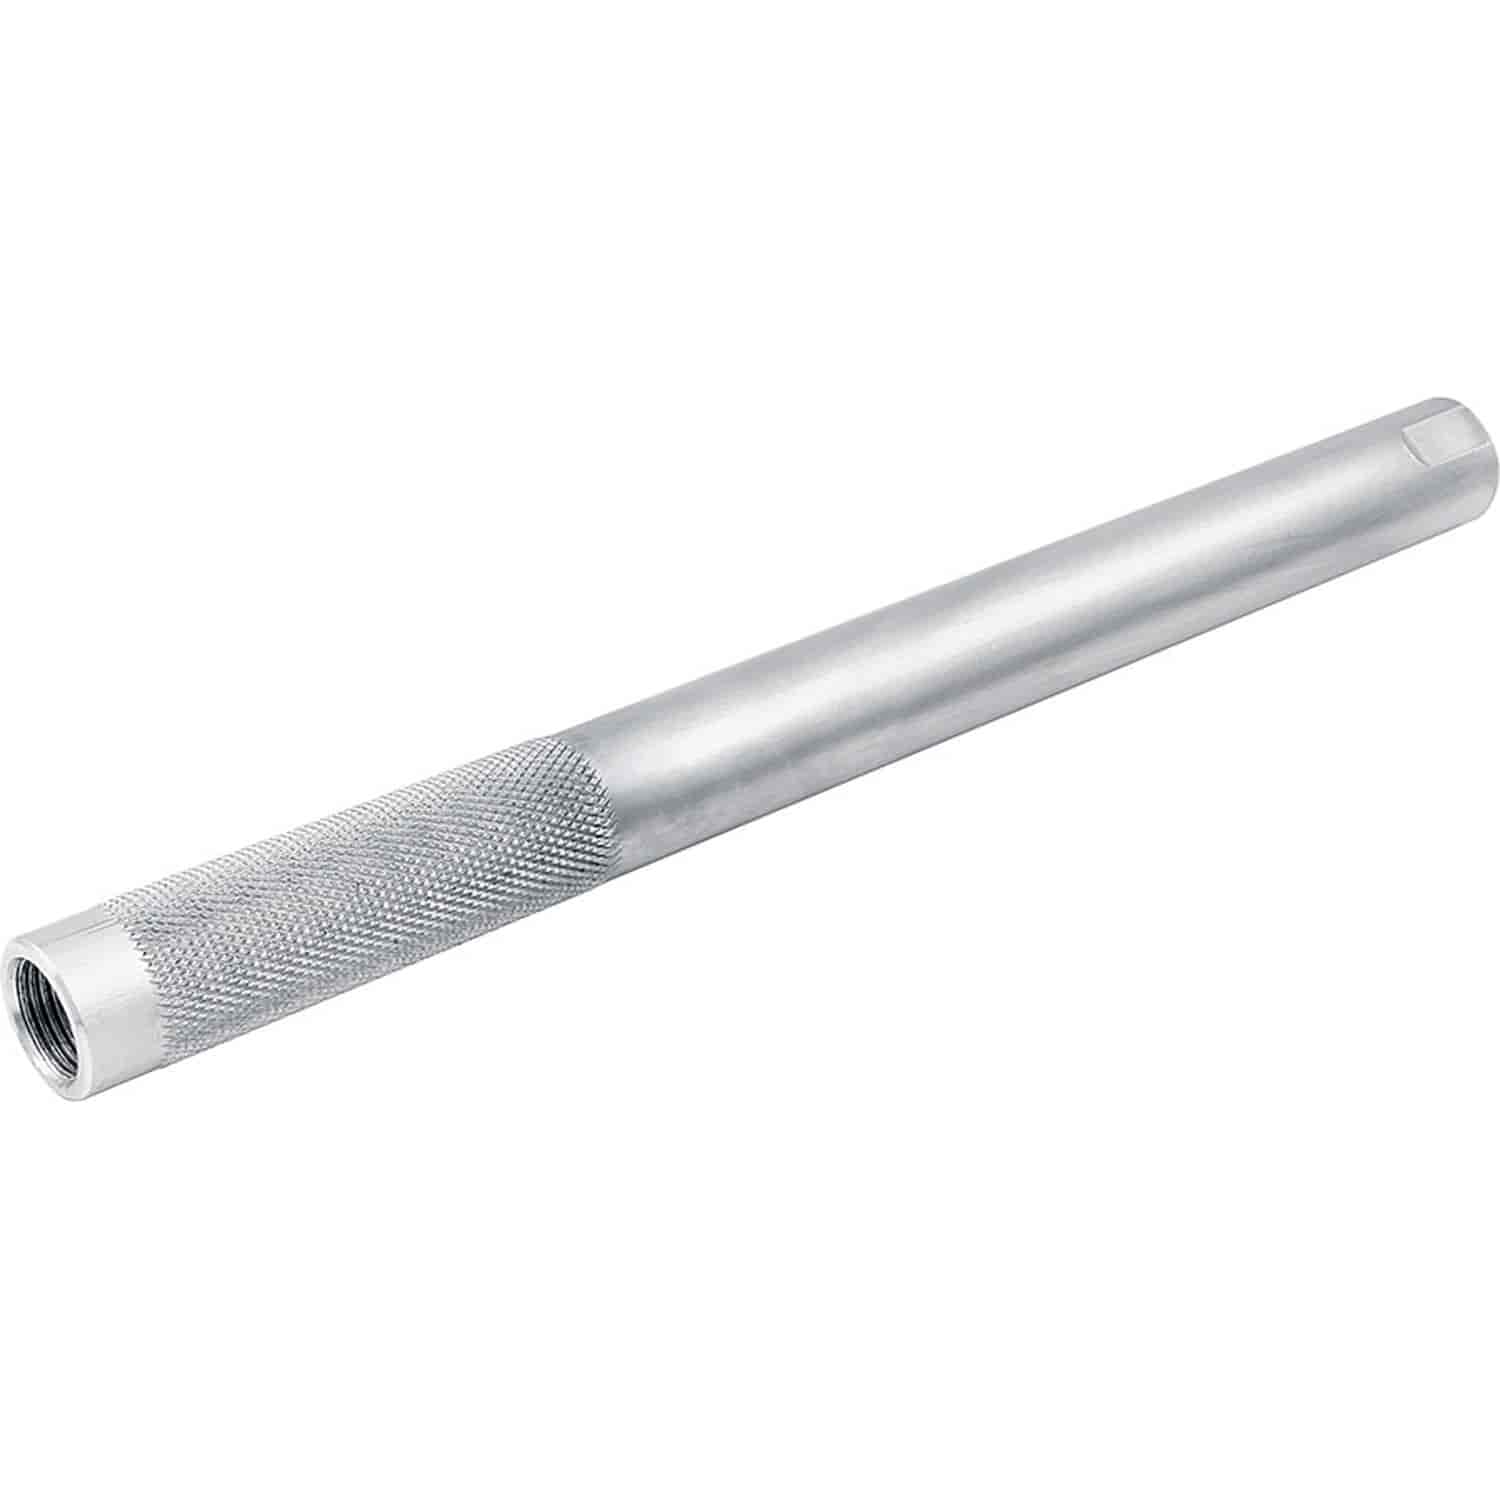 Swedged Aluminum Tie Rod Tube Length: 12